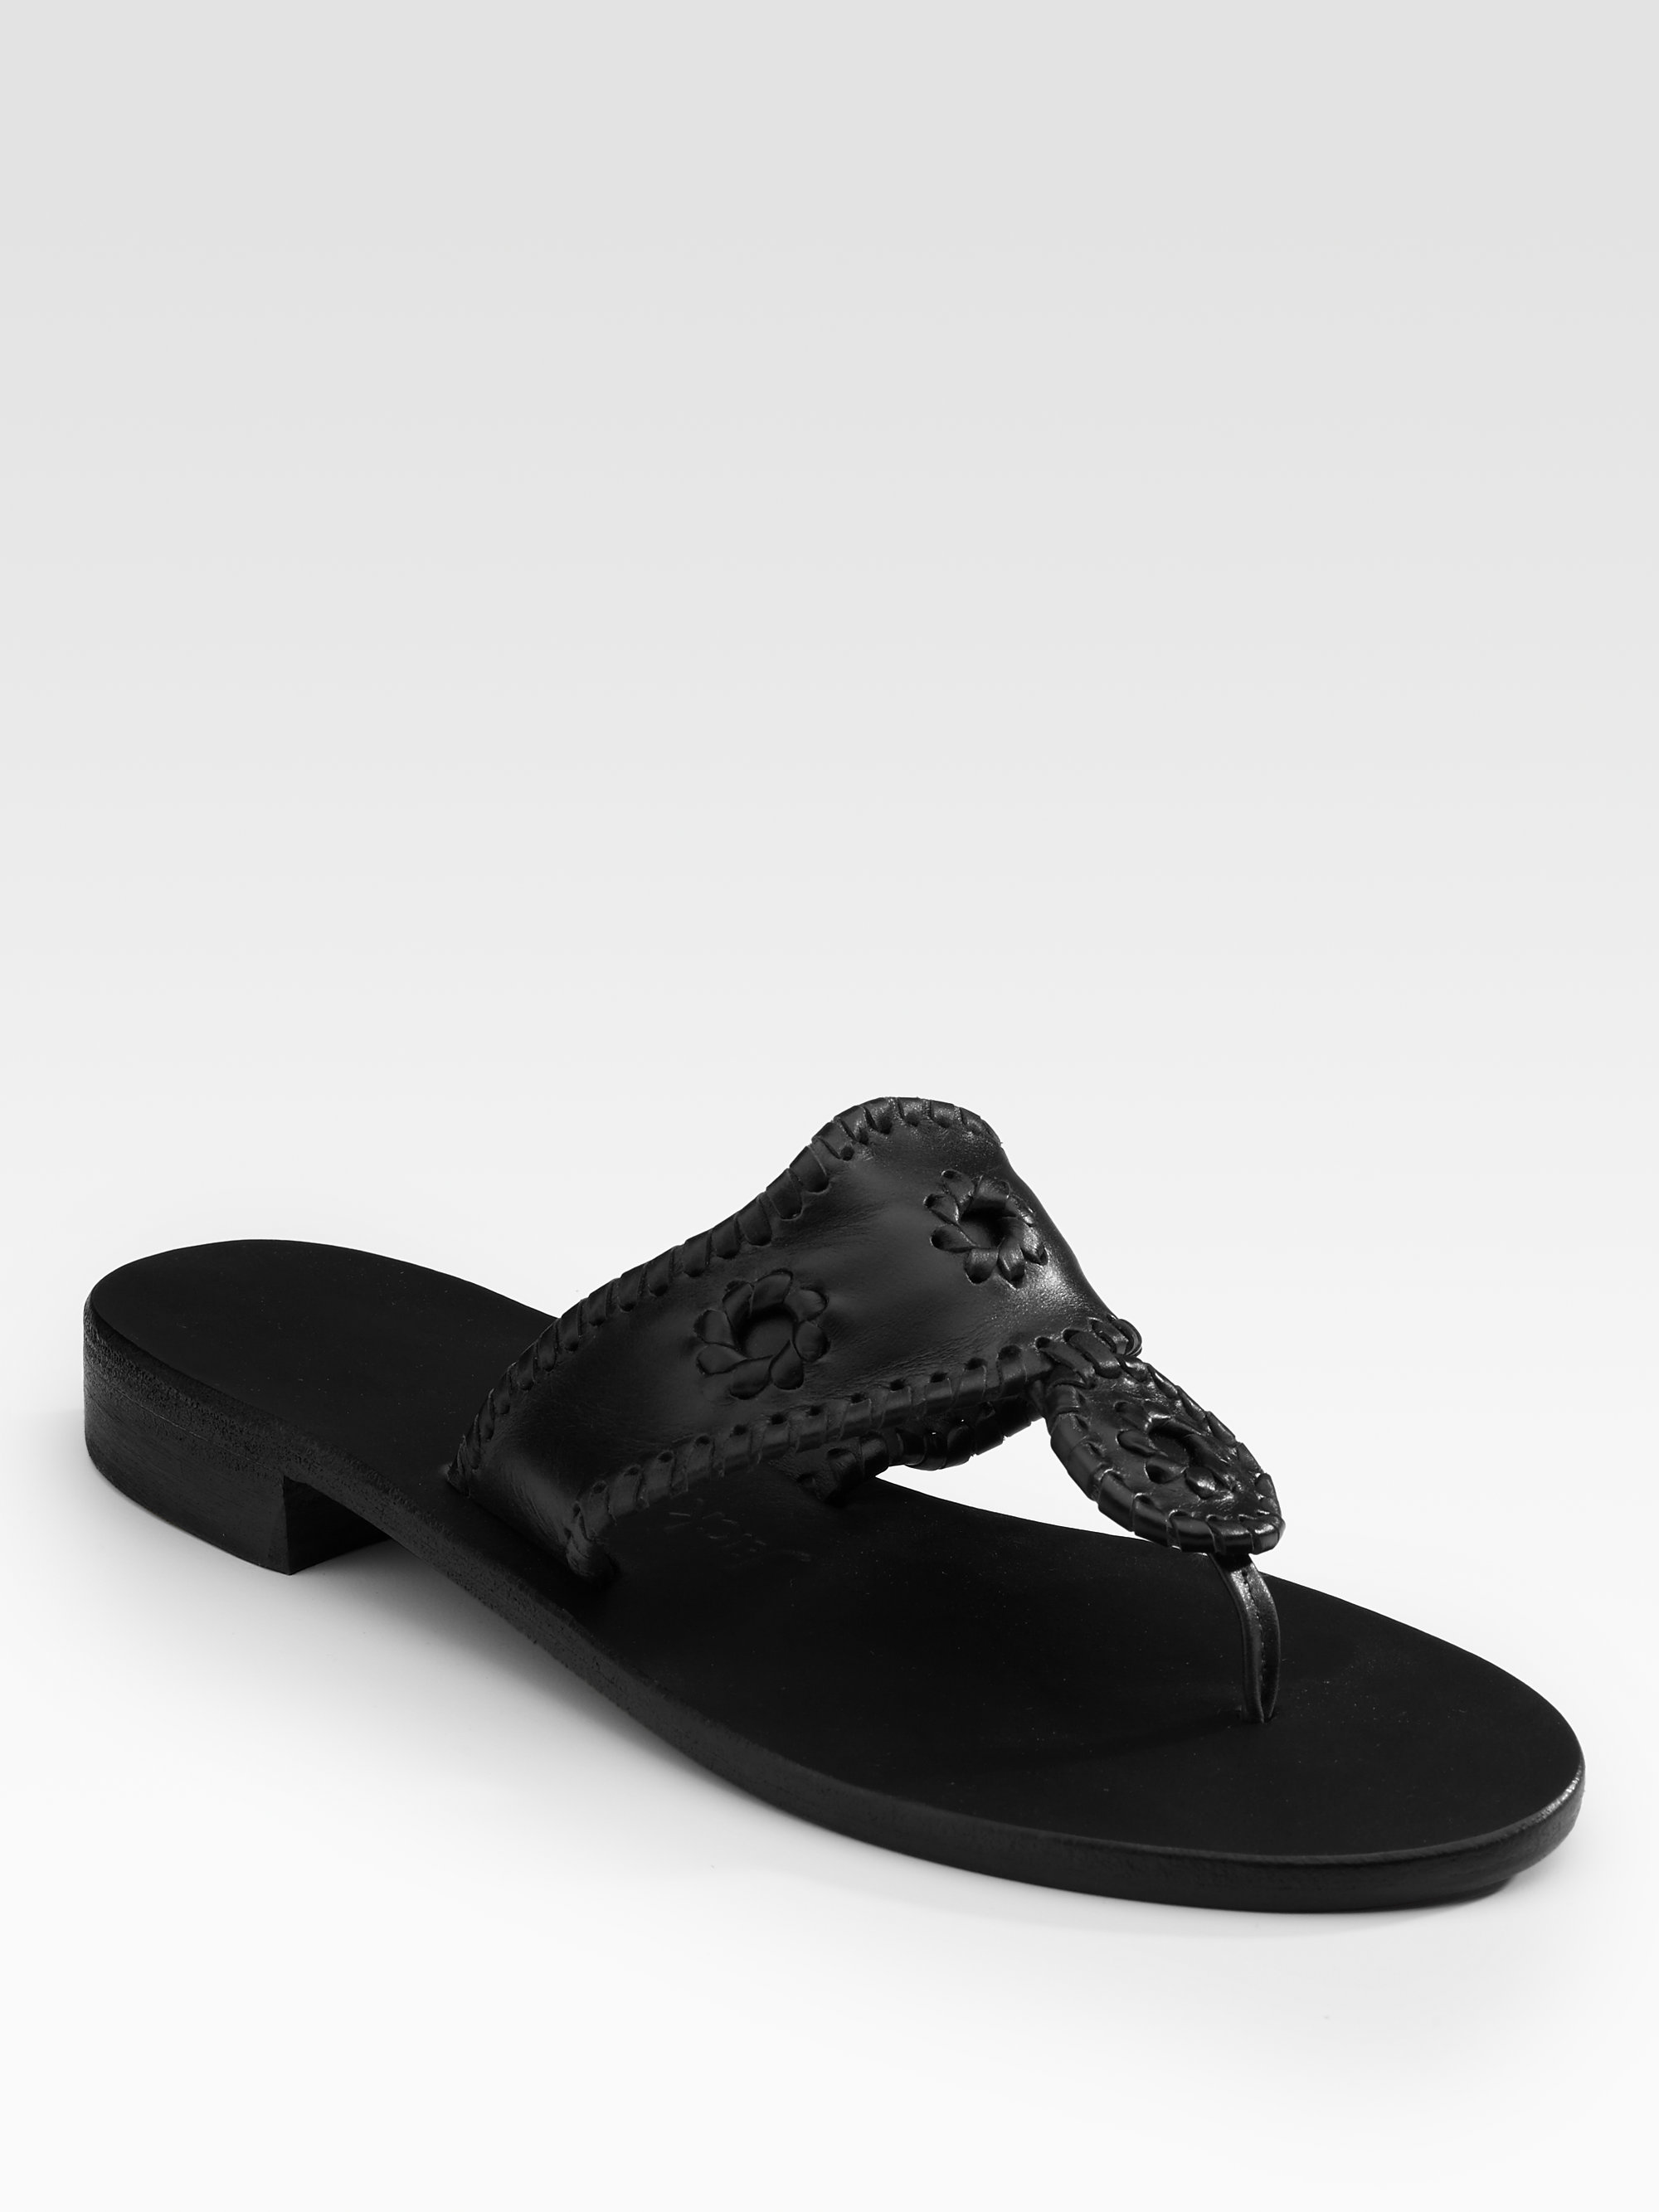 Jack Rogers Black Label Navajo Sandals 